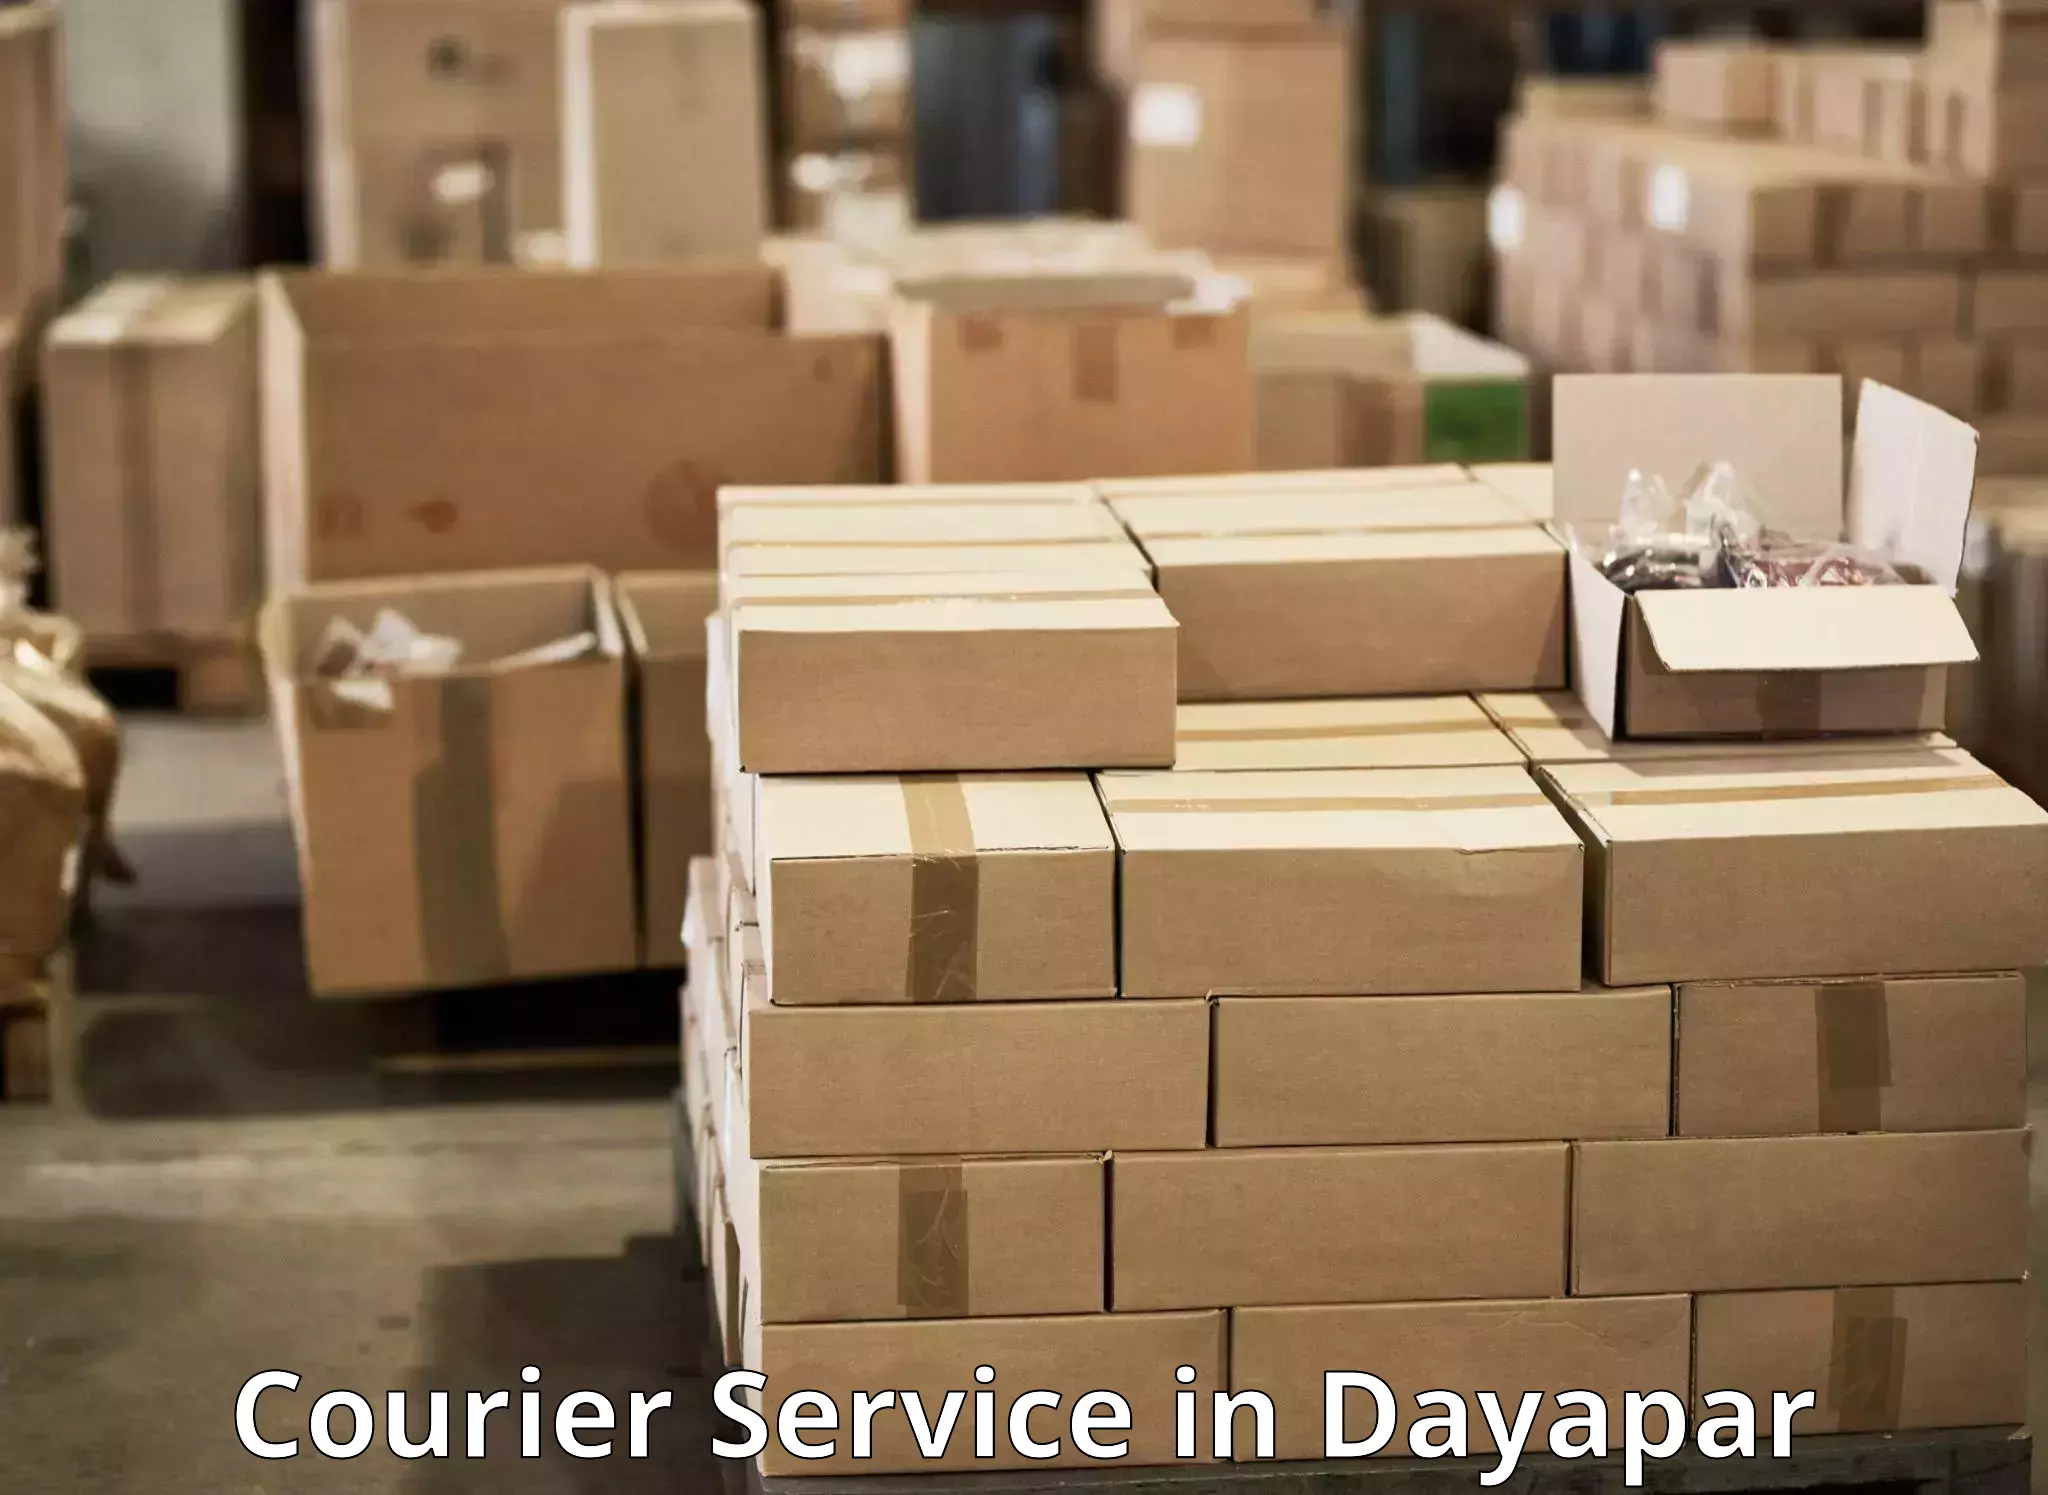 Modern delivery technologies in Dayapar